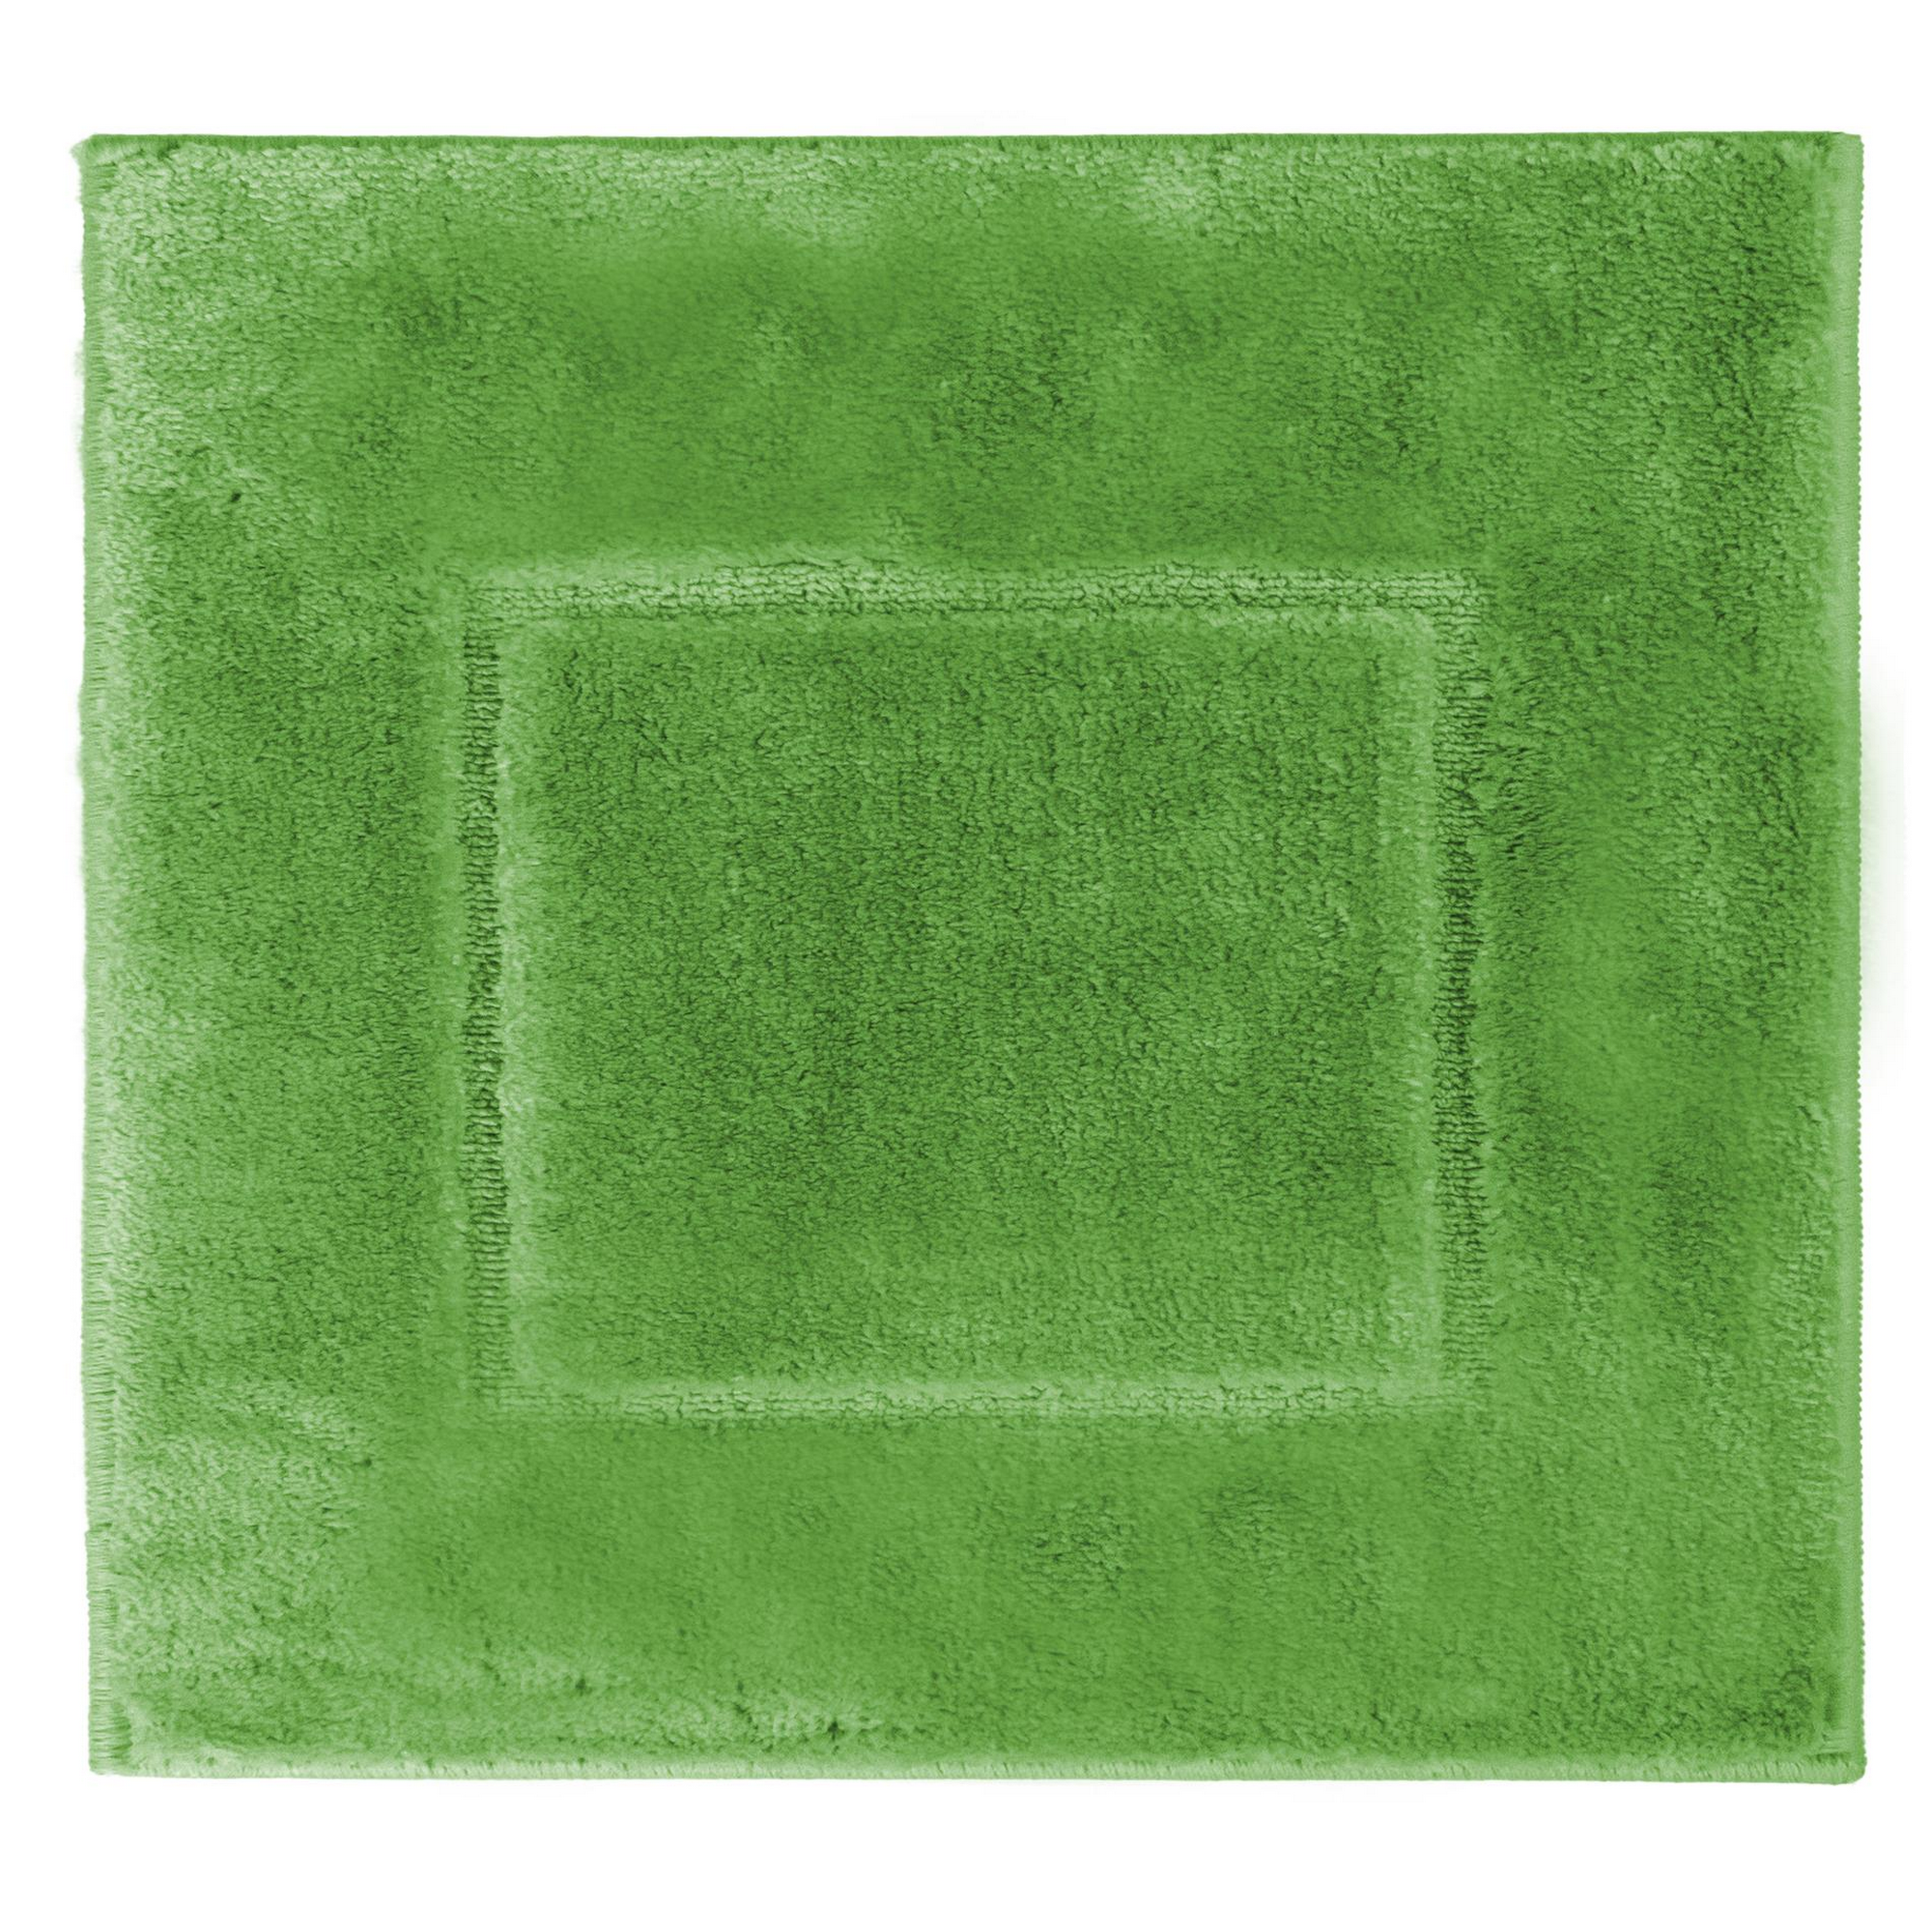 Badteppich 'Stadion' Microfaser grün 50 x 50 cm + product picture